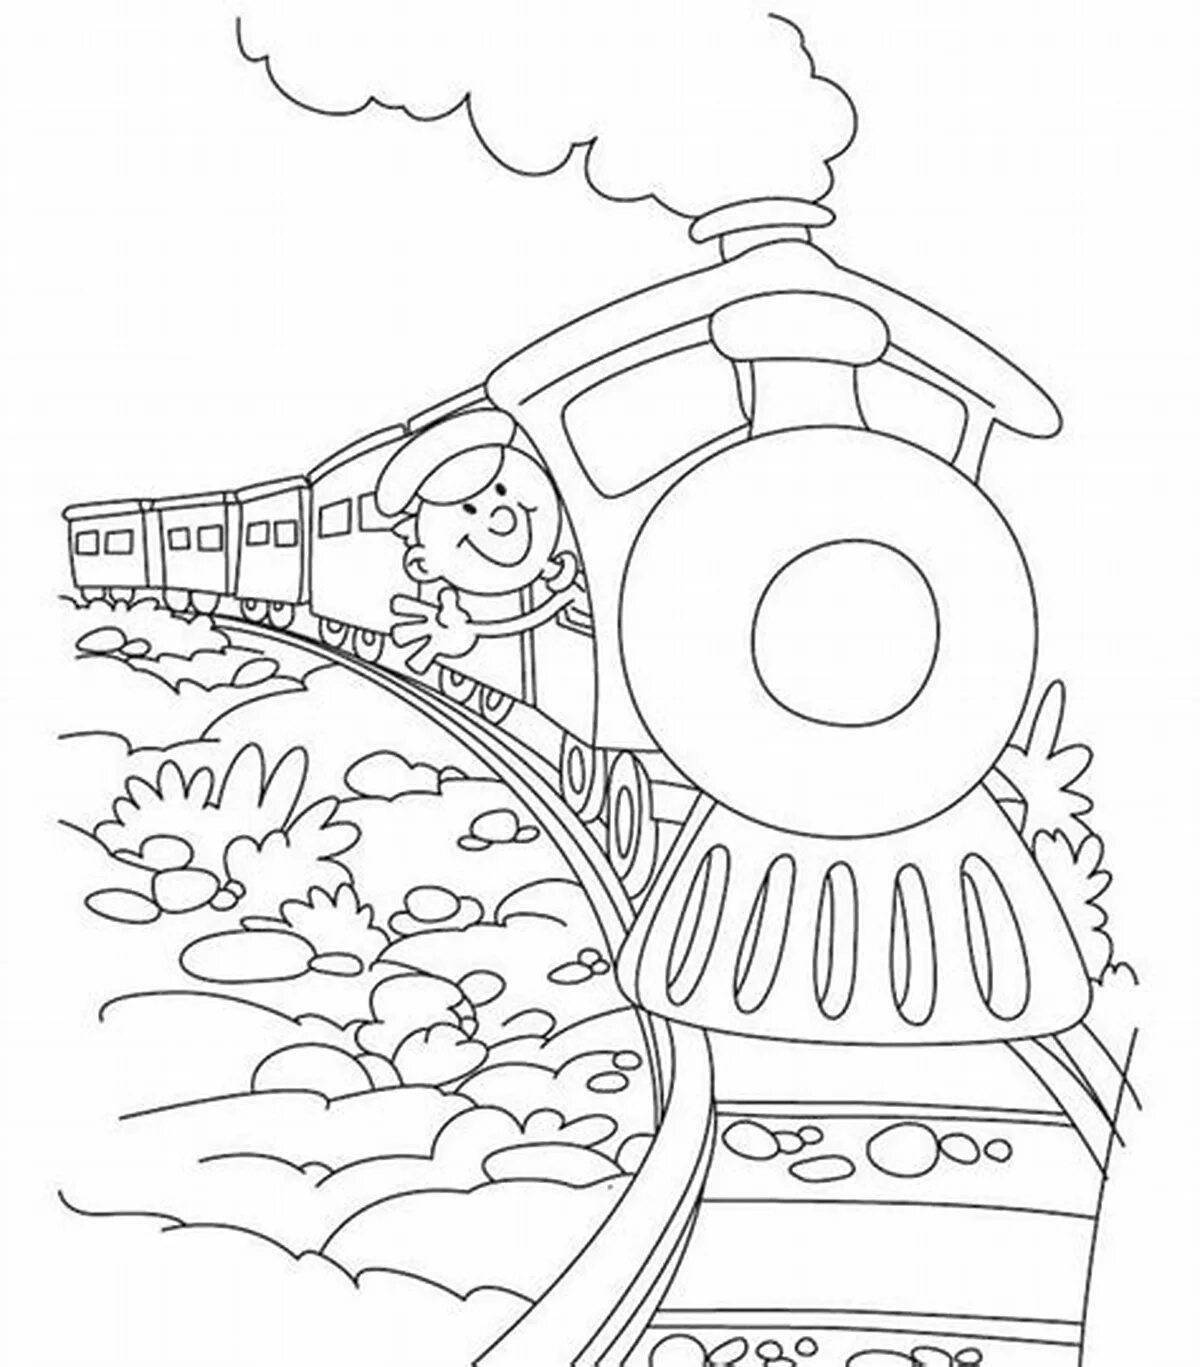 Дорога раскраска для детей. Раскраска поезд. Раскраска железная дорога для детей. Рисунок поезда для раскрашивания. Раскраски. Паровоз.